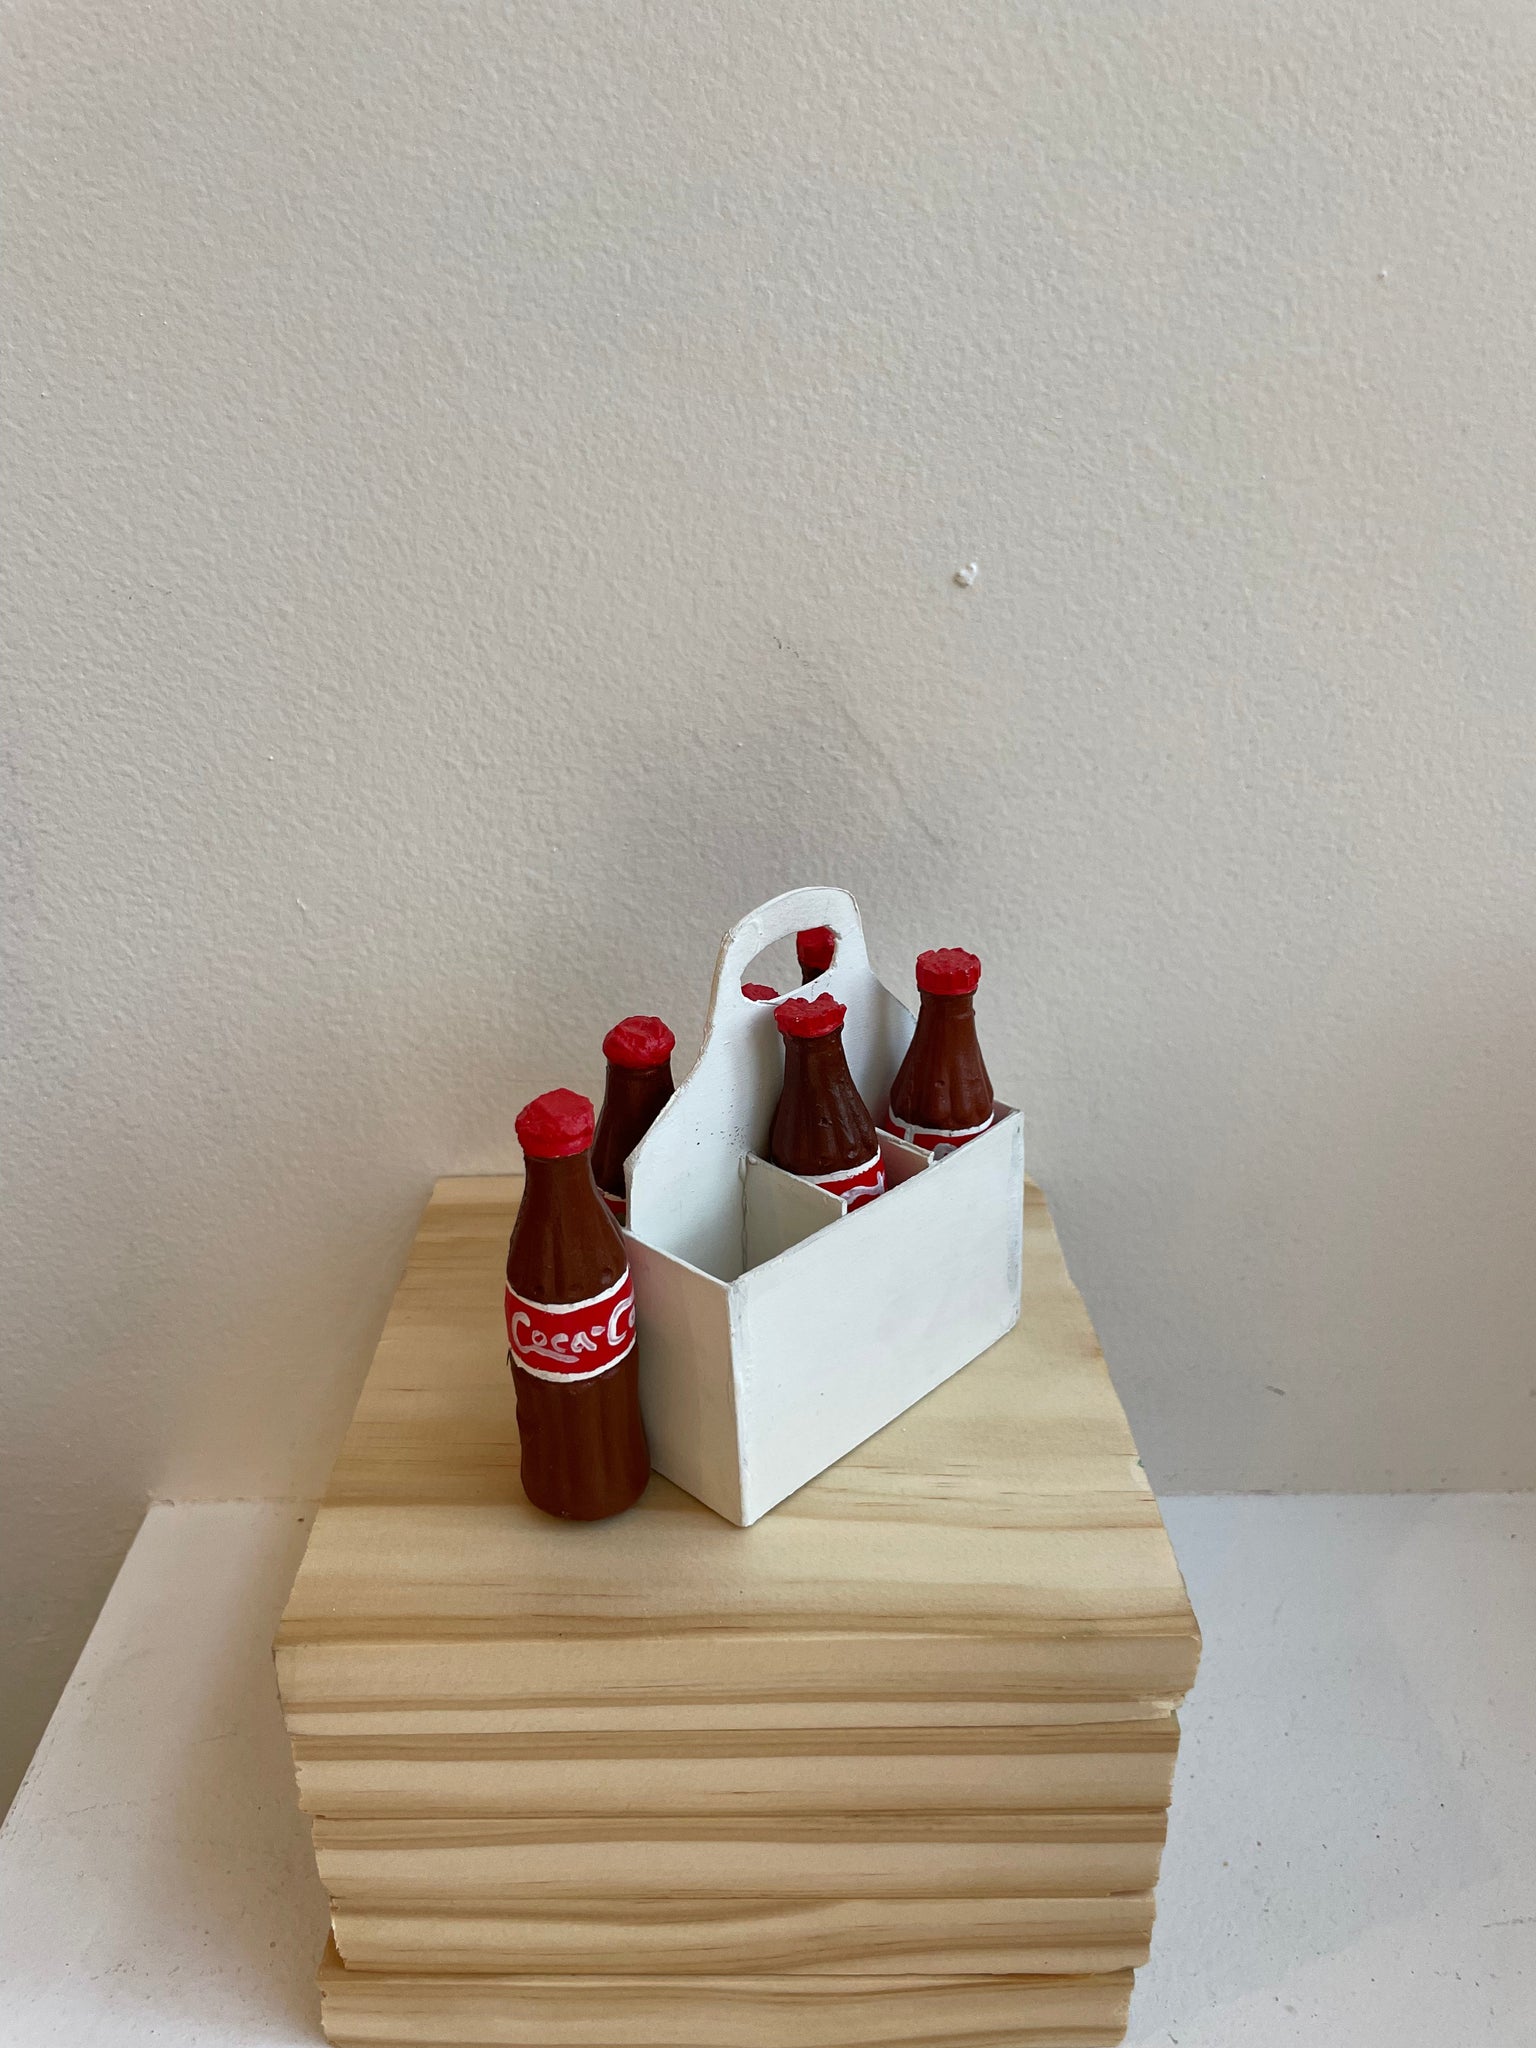 Noah Kloster, "Concrete Coke Bottles" SOLD